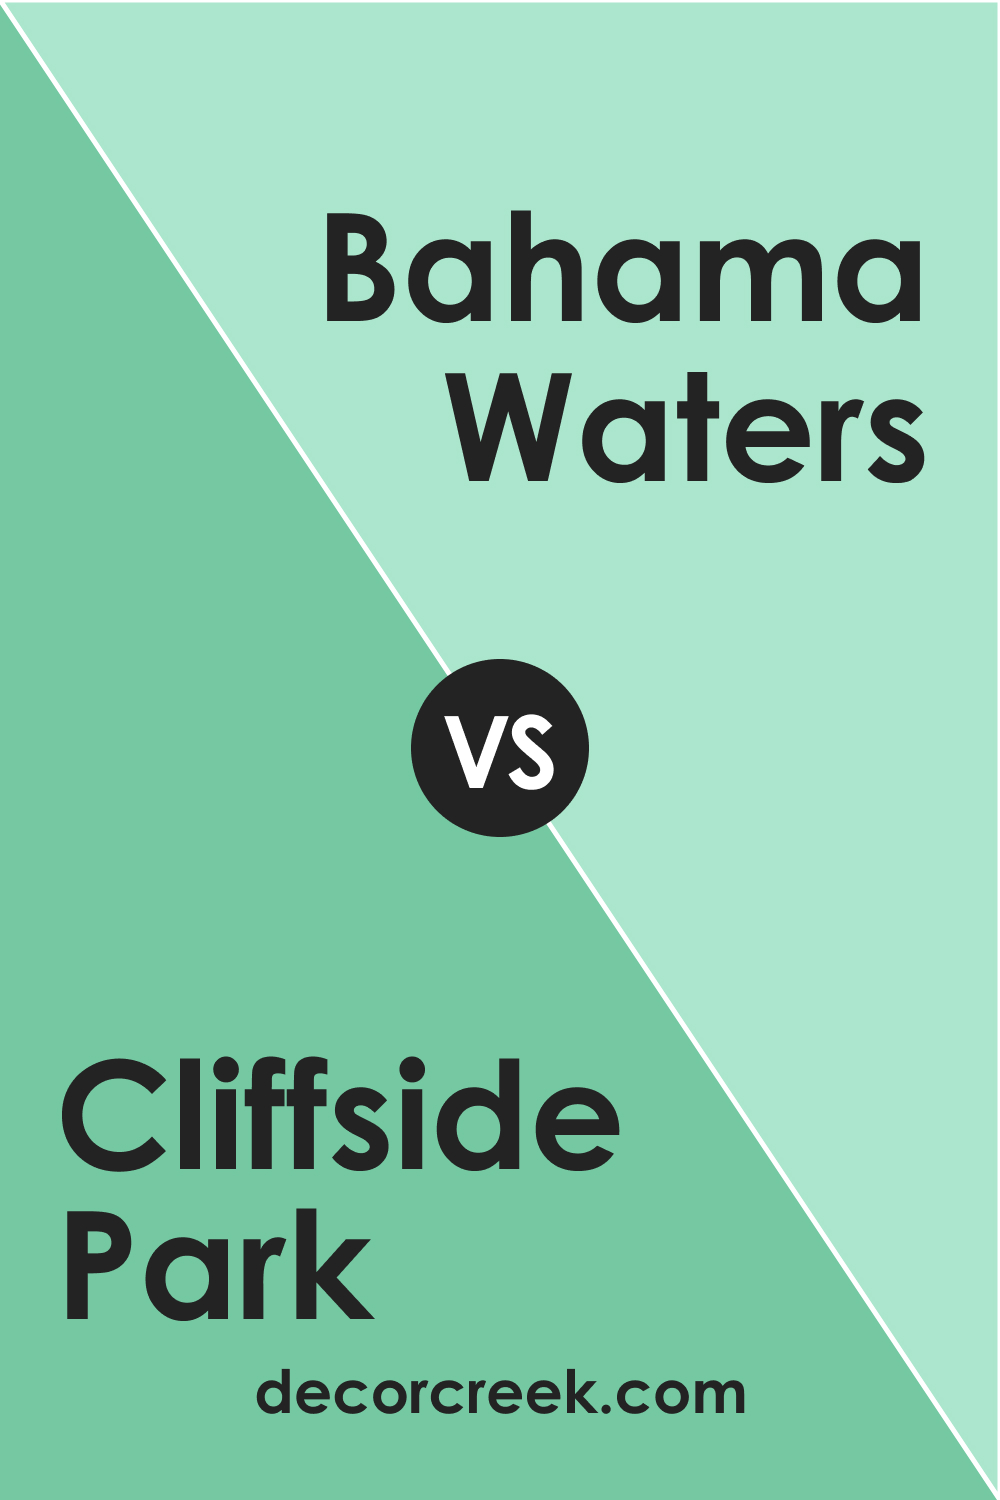 Cliffside Park 579 vs. BM 576 Bahama Waters